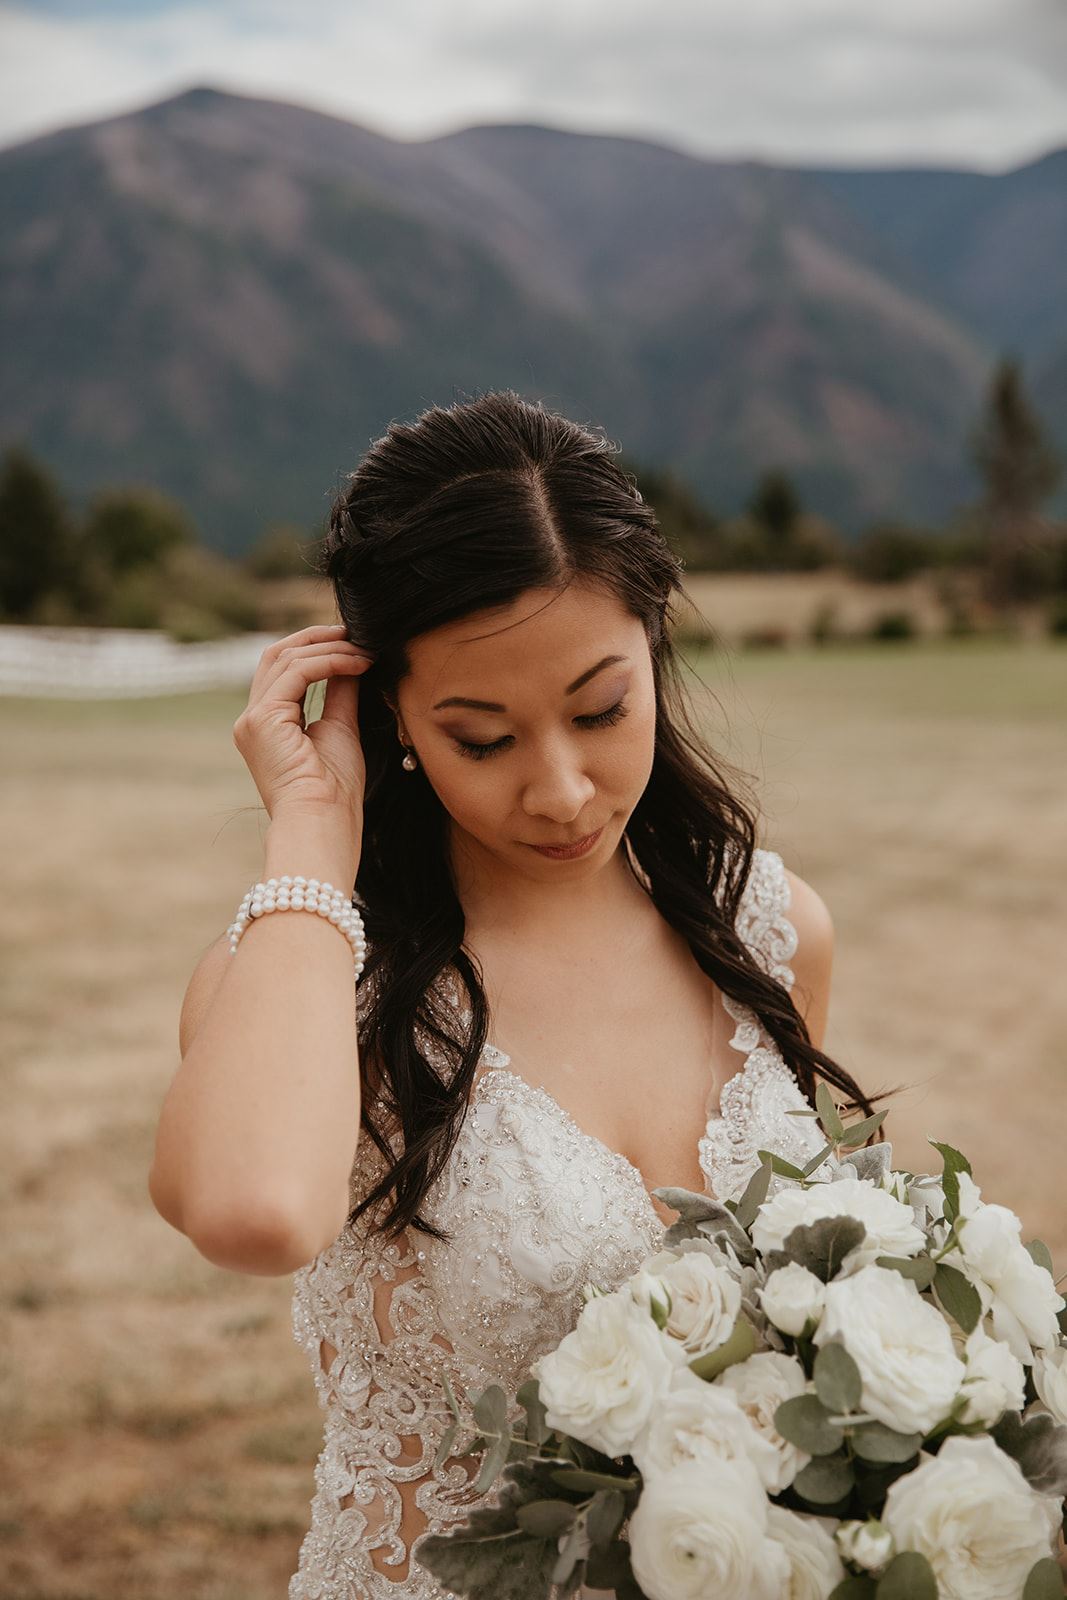 Featured Bride #4